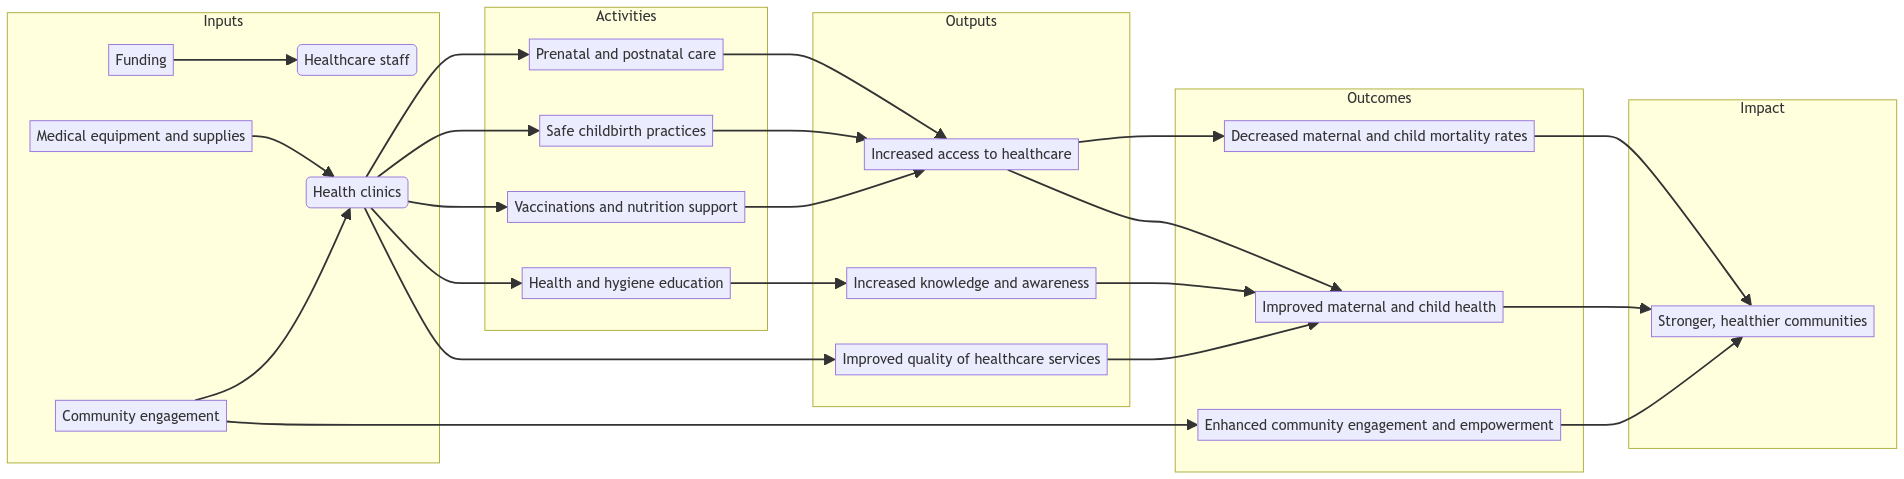 logic model example in public healthcare